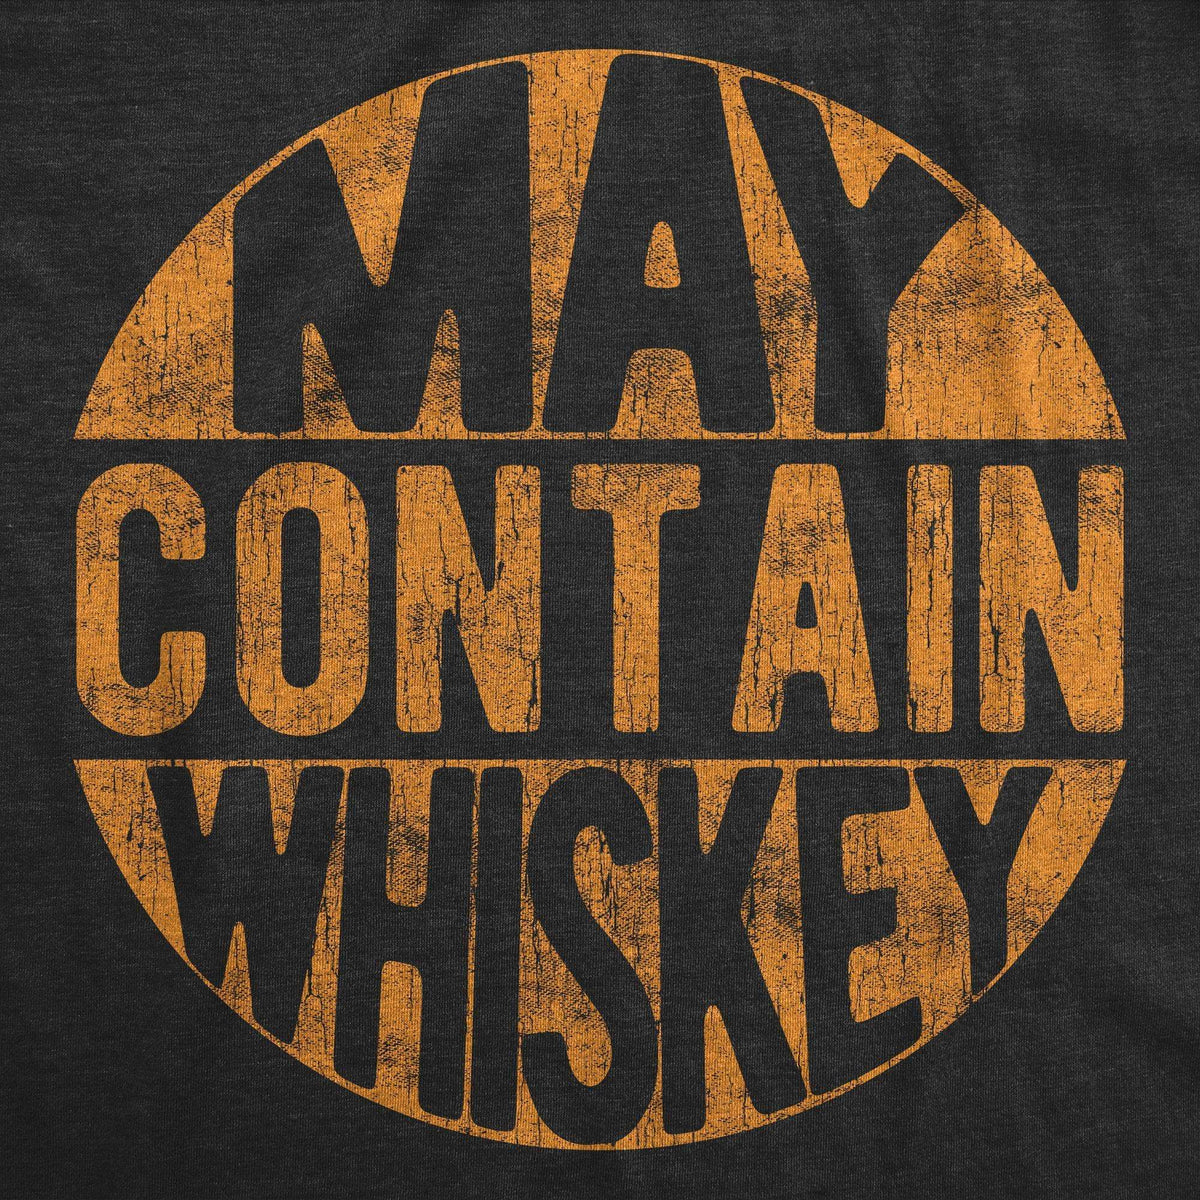 May Contain Whiskey Men&#39;s Tshirt - Crazy Dog T-Shirts